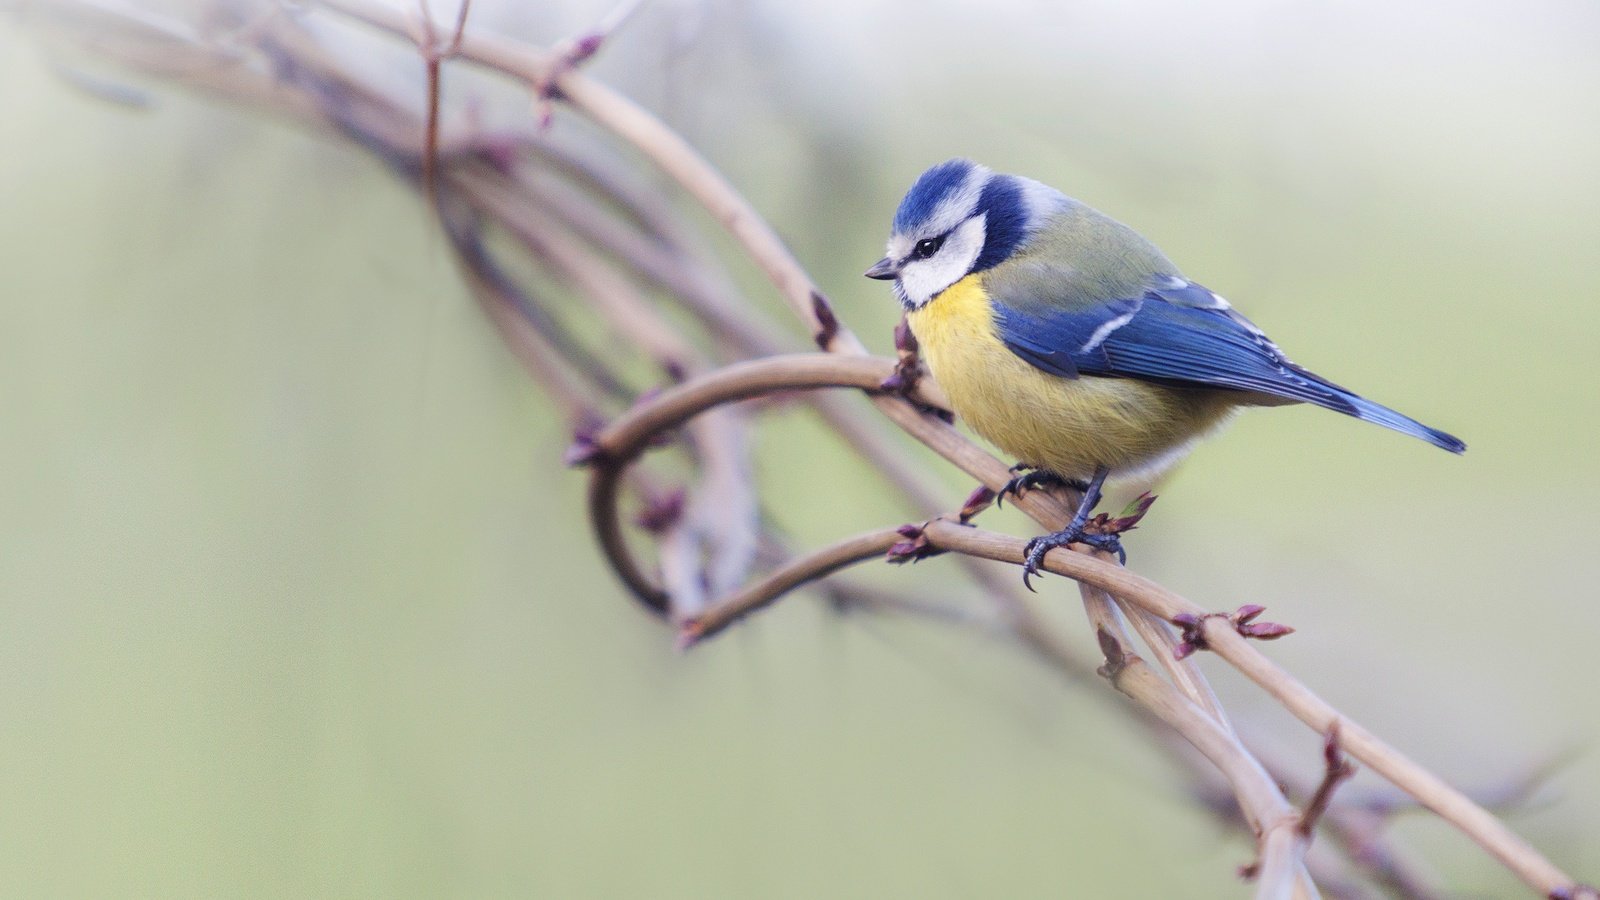 Обои фон, ветки, птица, синица, background, branches, bird, tit разрешение 2880x1620 Загрузить